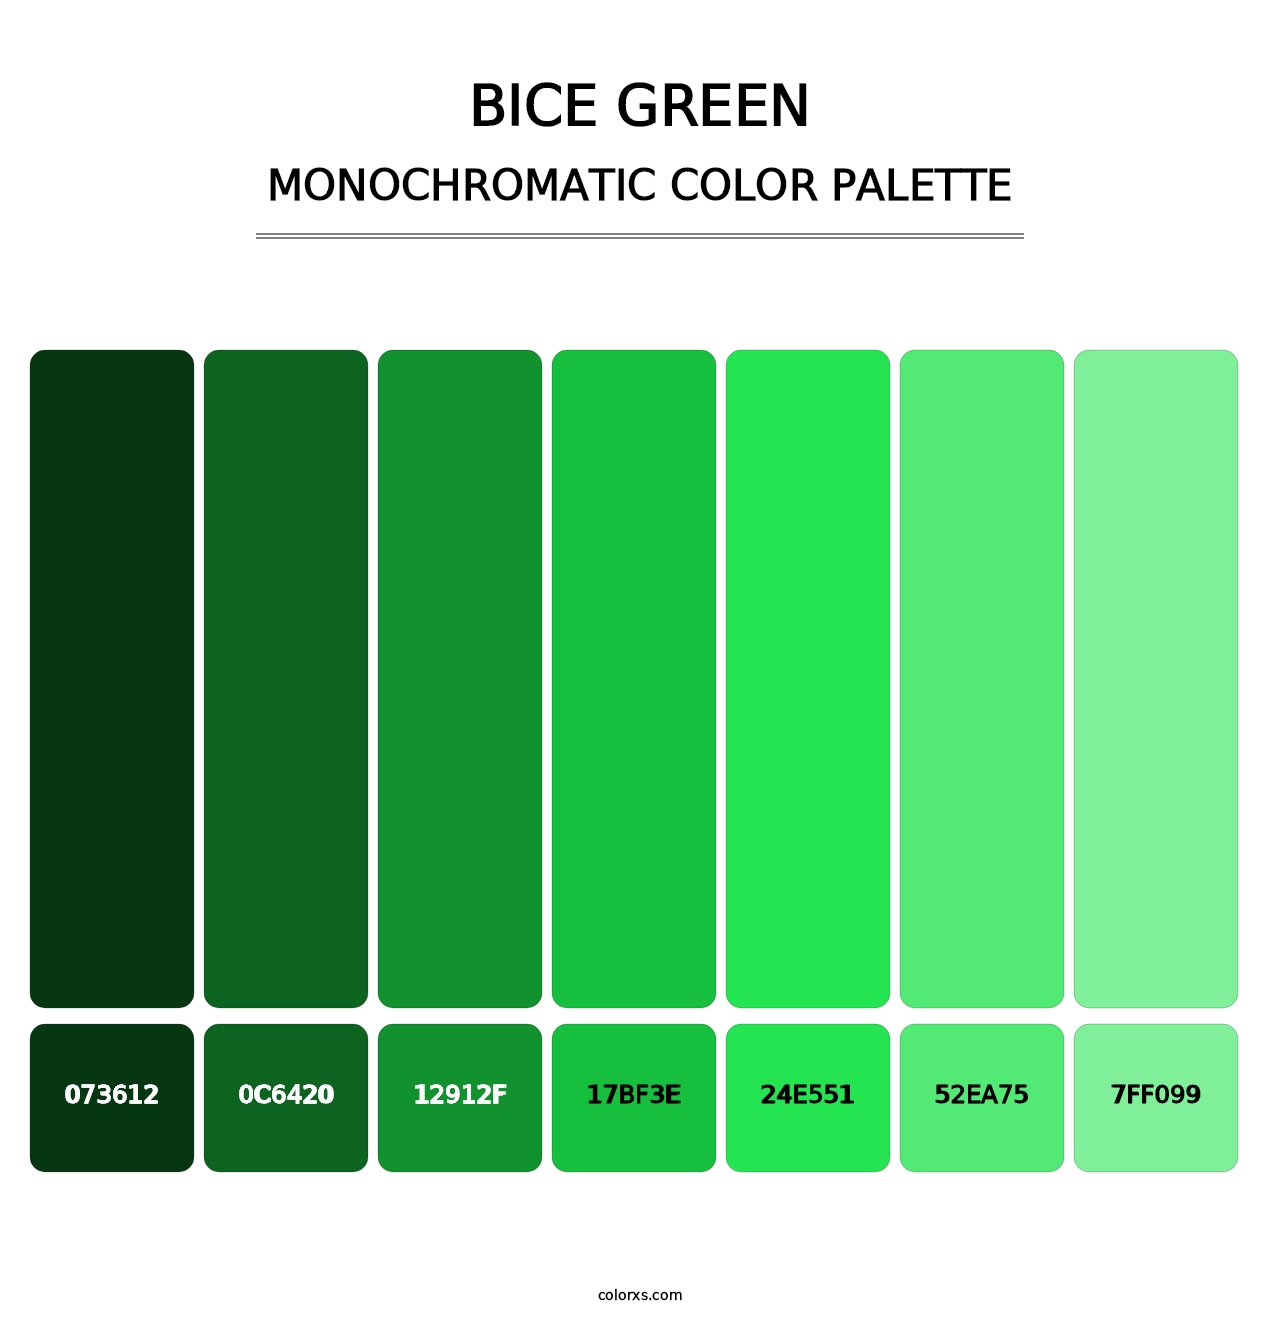 Bice Green - Monochromatic Color Palette